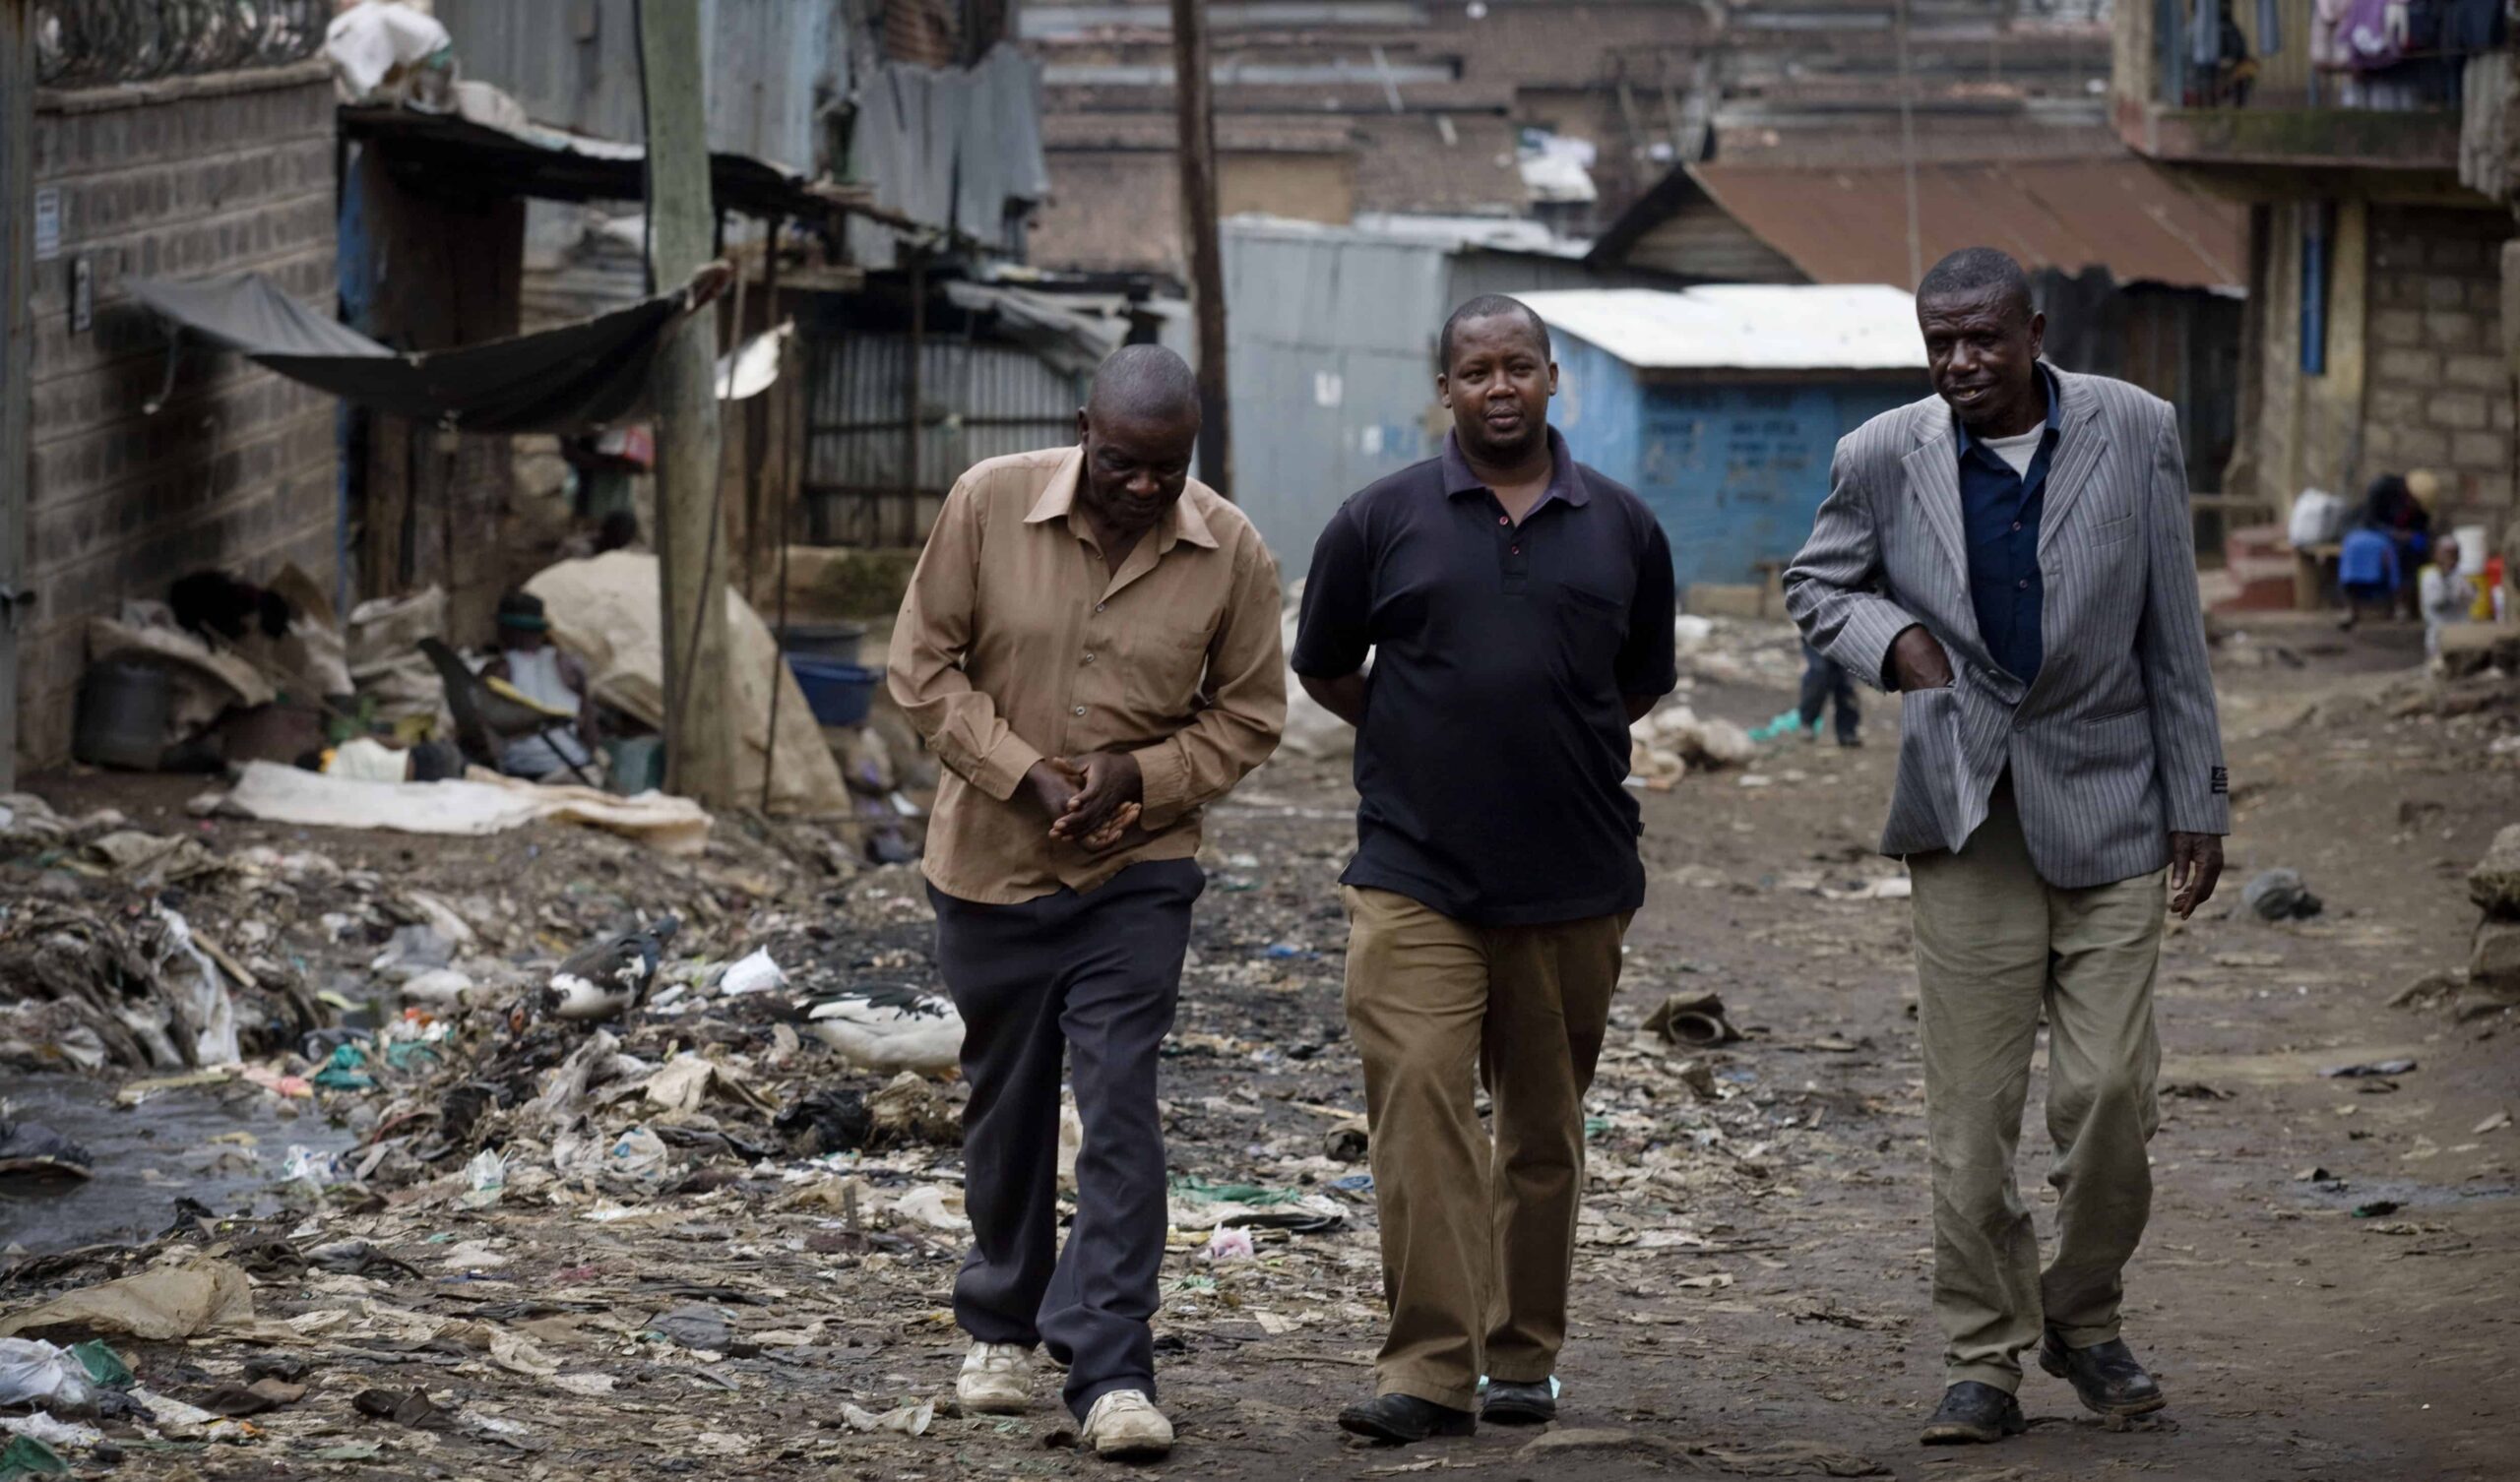 Three men walk down a garbage strewn dirt road.